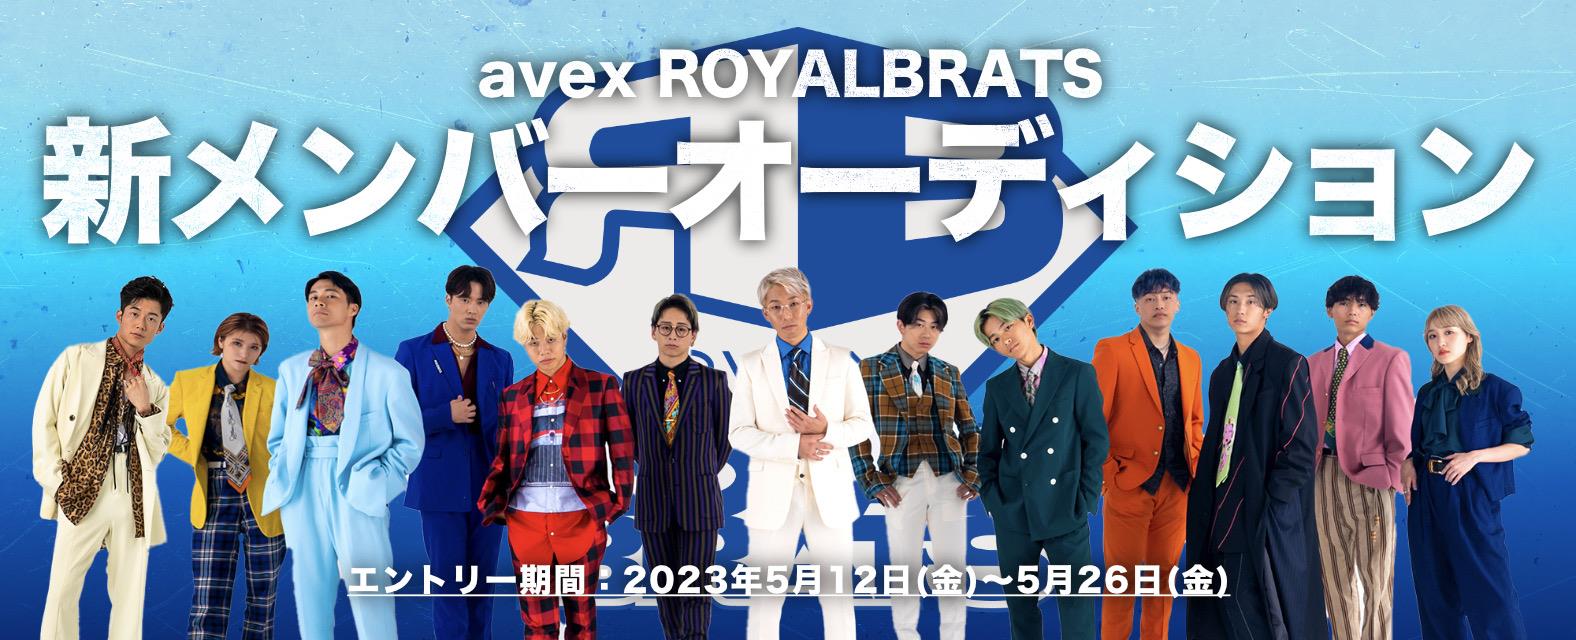 【23-24 season】avex ROYALBRATS Member Audition